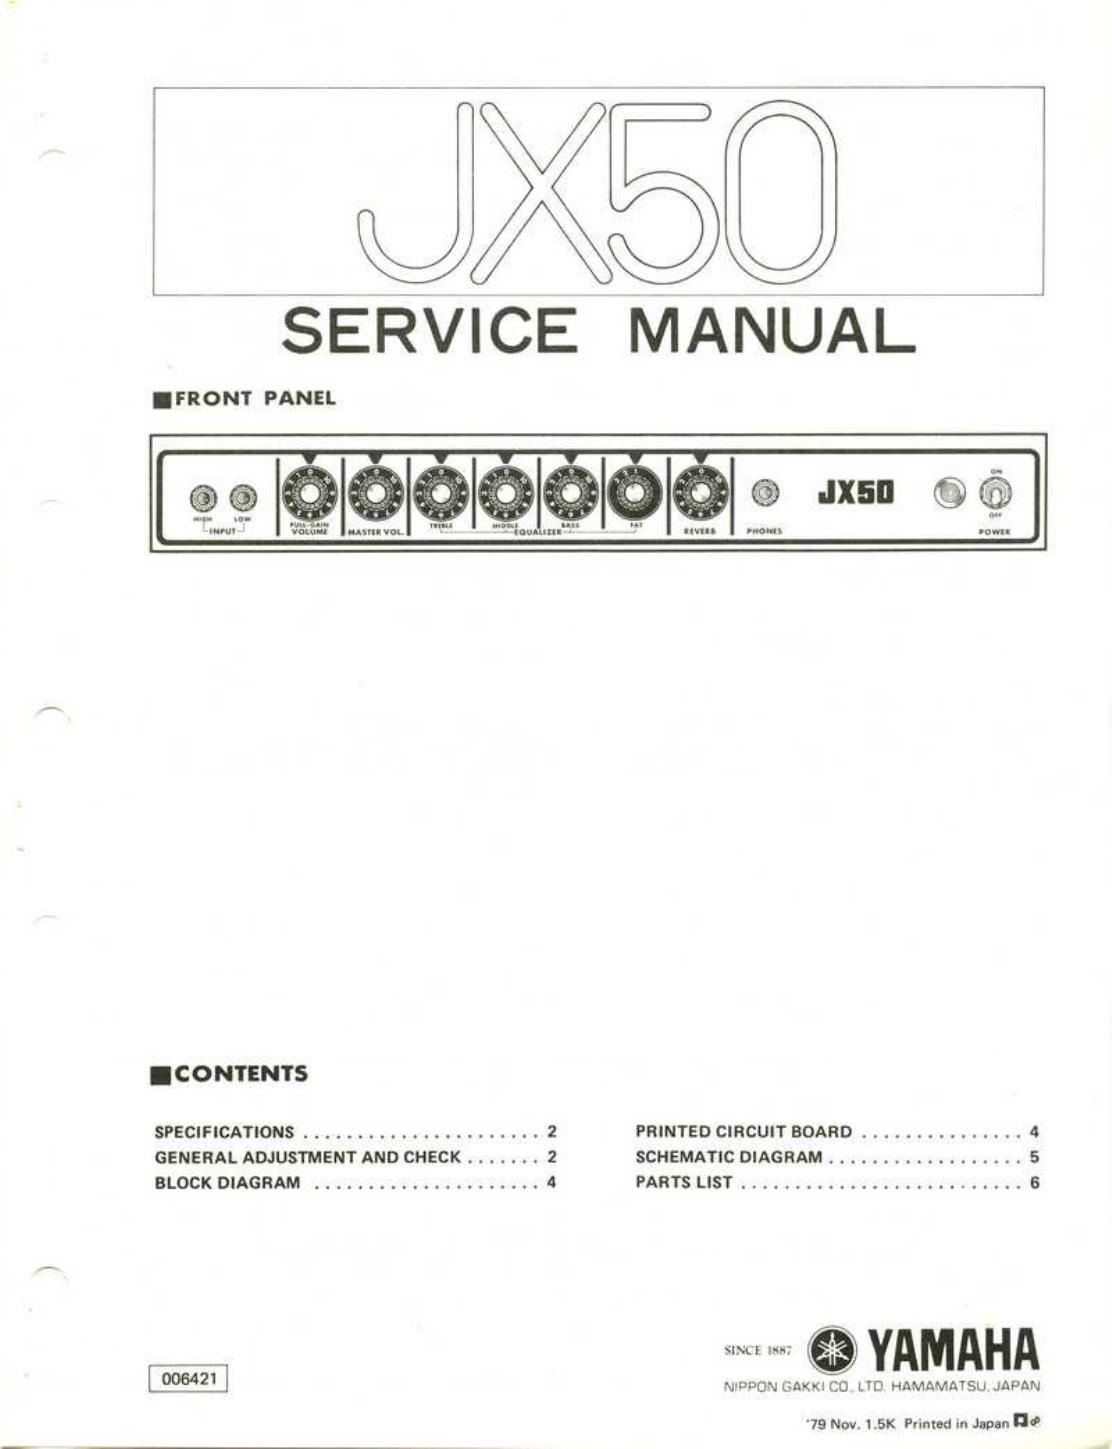 yamaha jx50 service manual